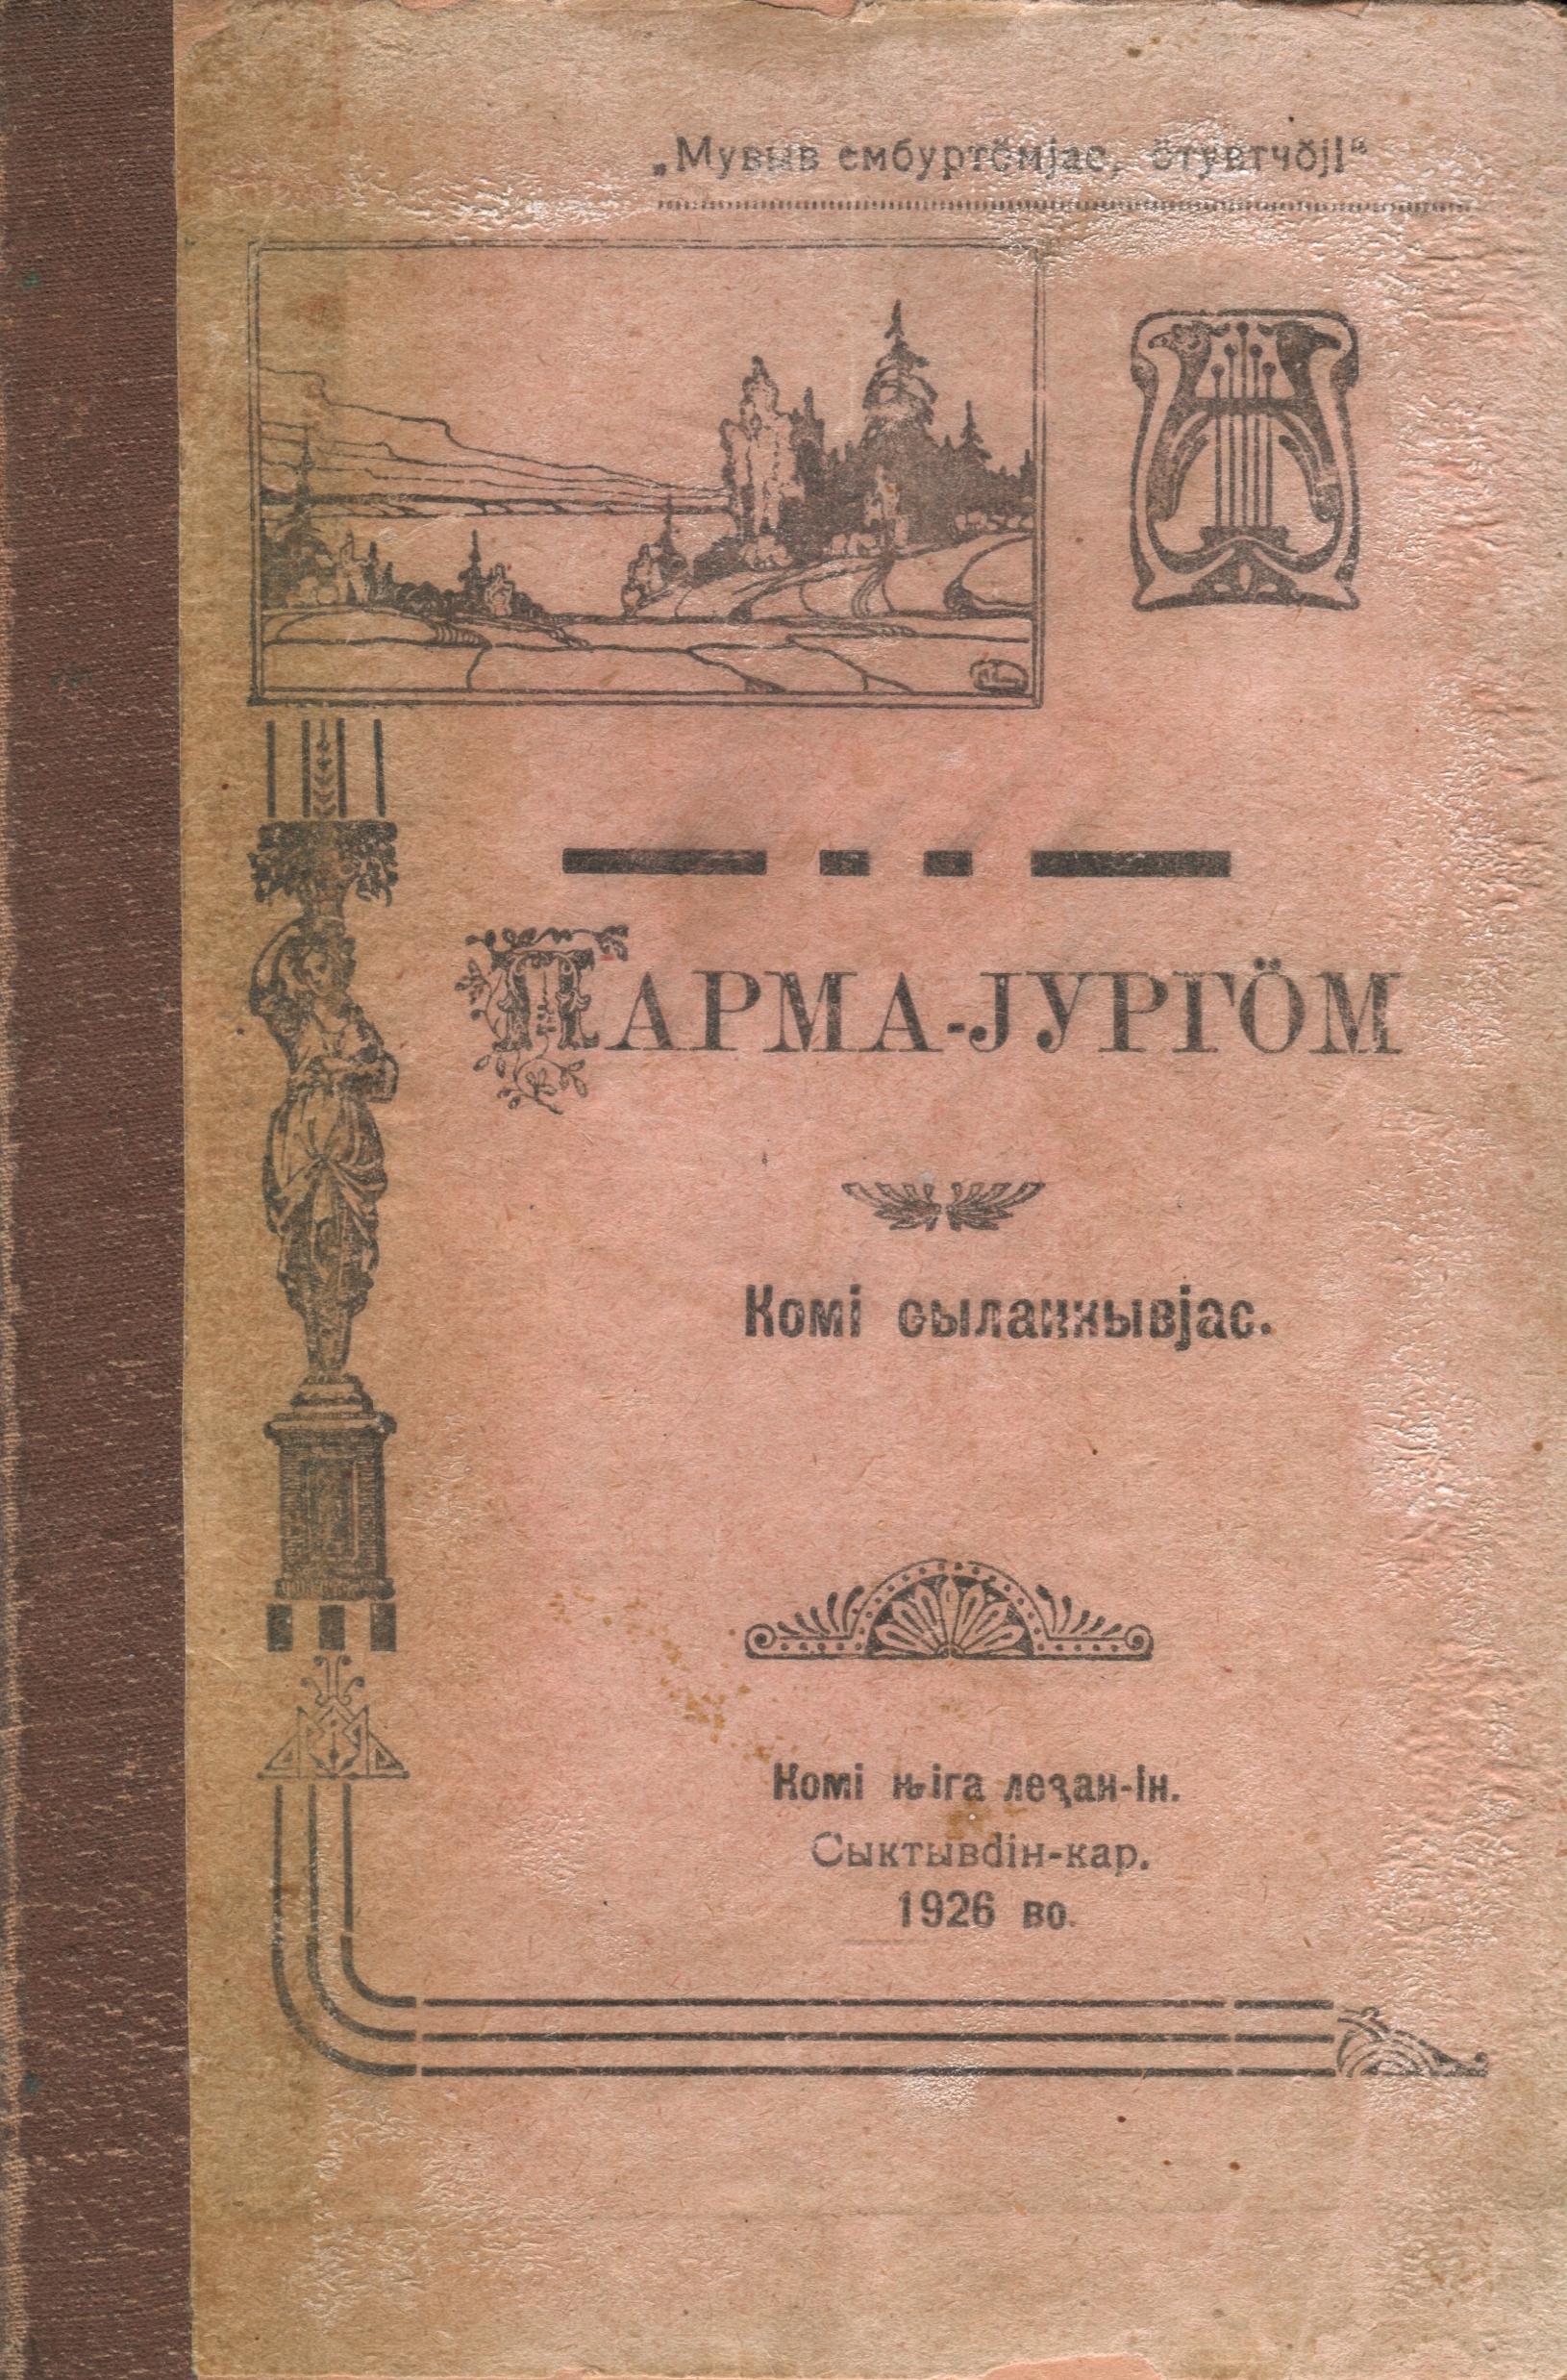 Parmajurgom 1926 cover.jpg